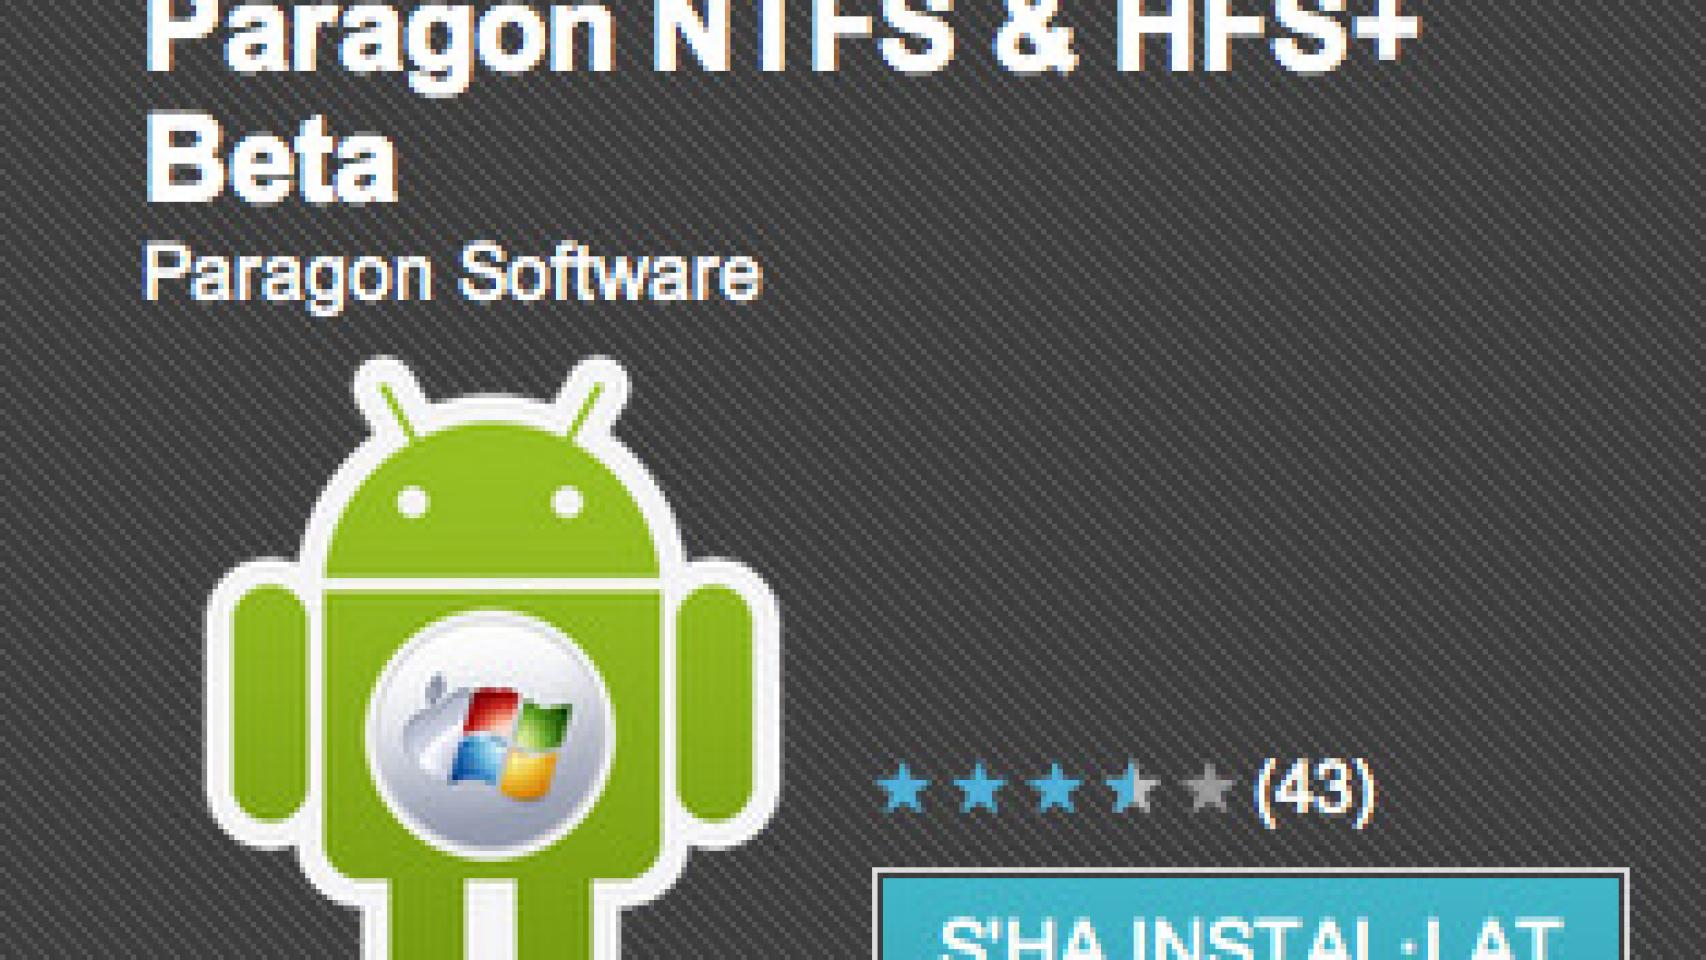 Monta un disco duro externo en tu Android con Paragon